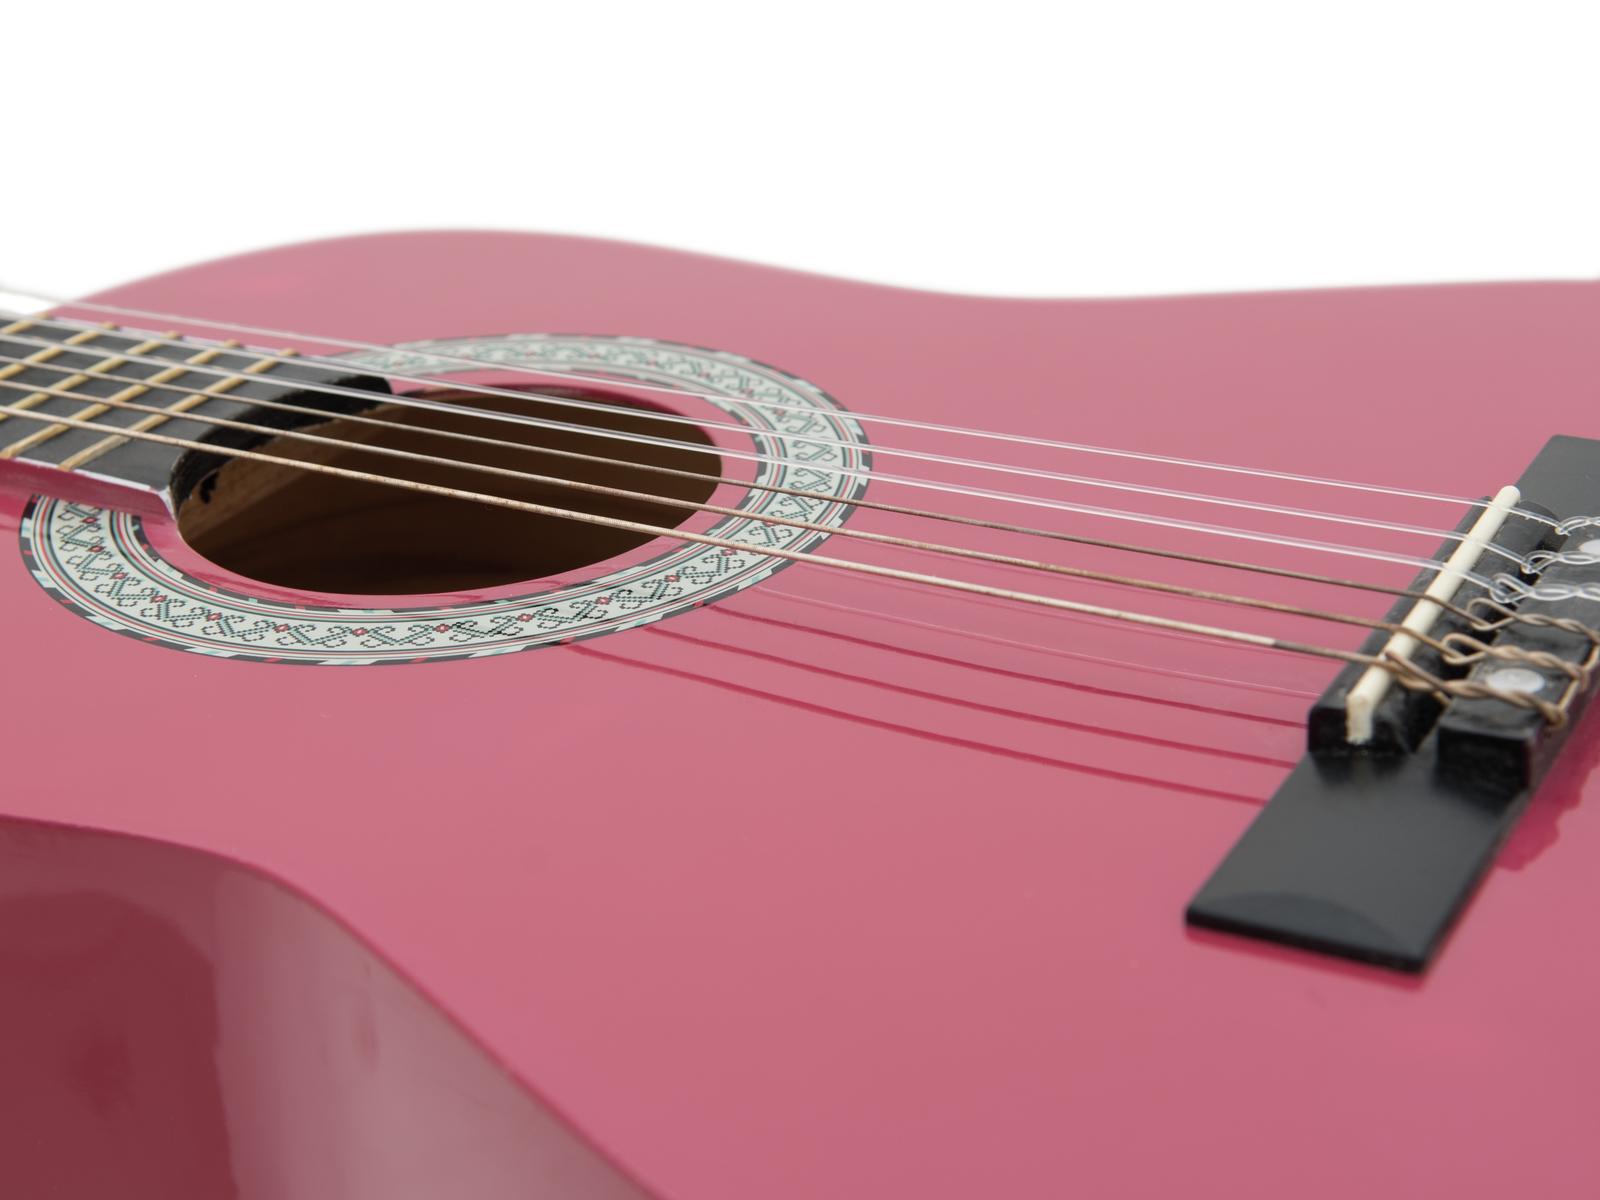 DIMAVERY AC-303 Klassikgitarre 1/2, pink